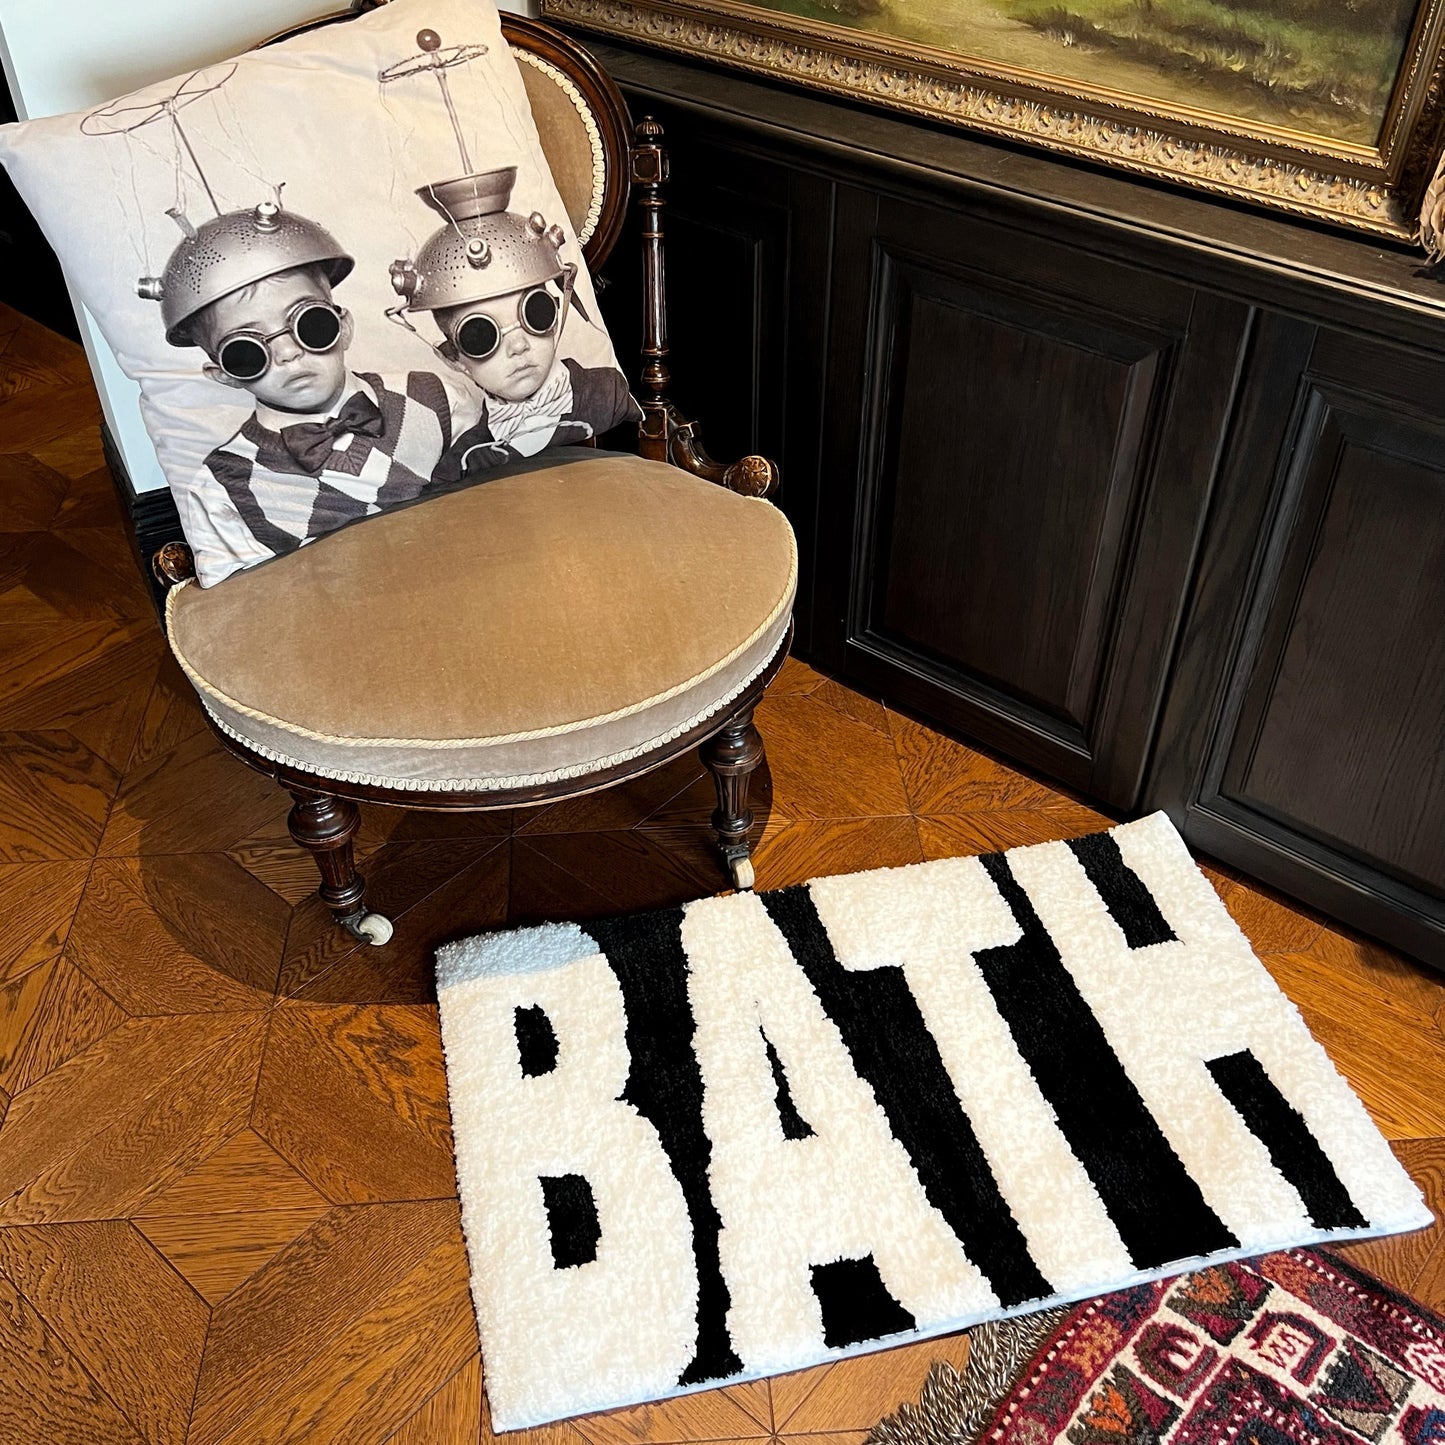 BATH Water-Absorbent Bath Mat from maija